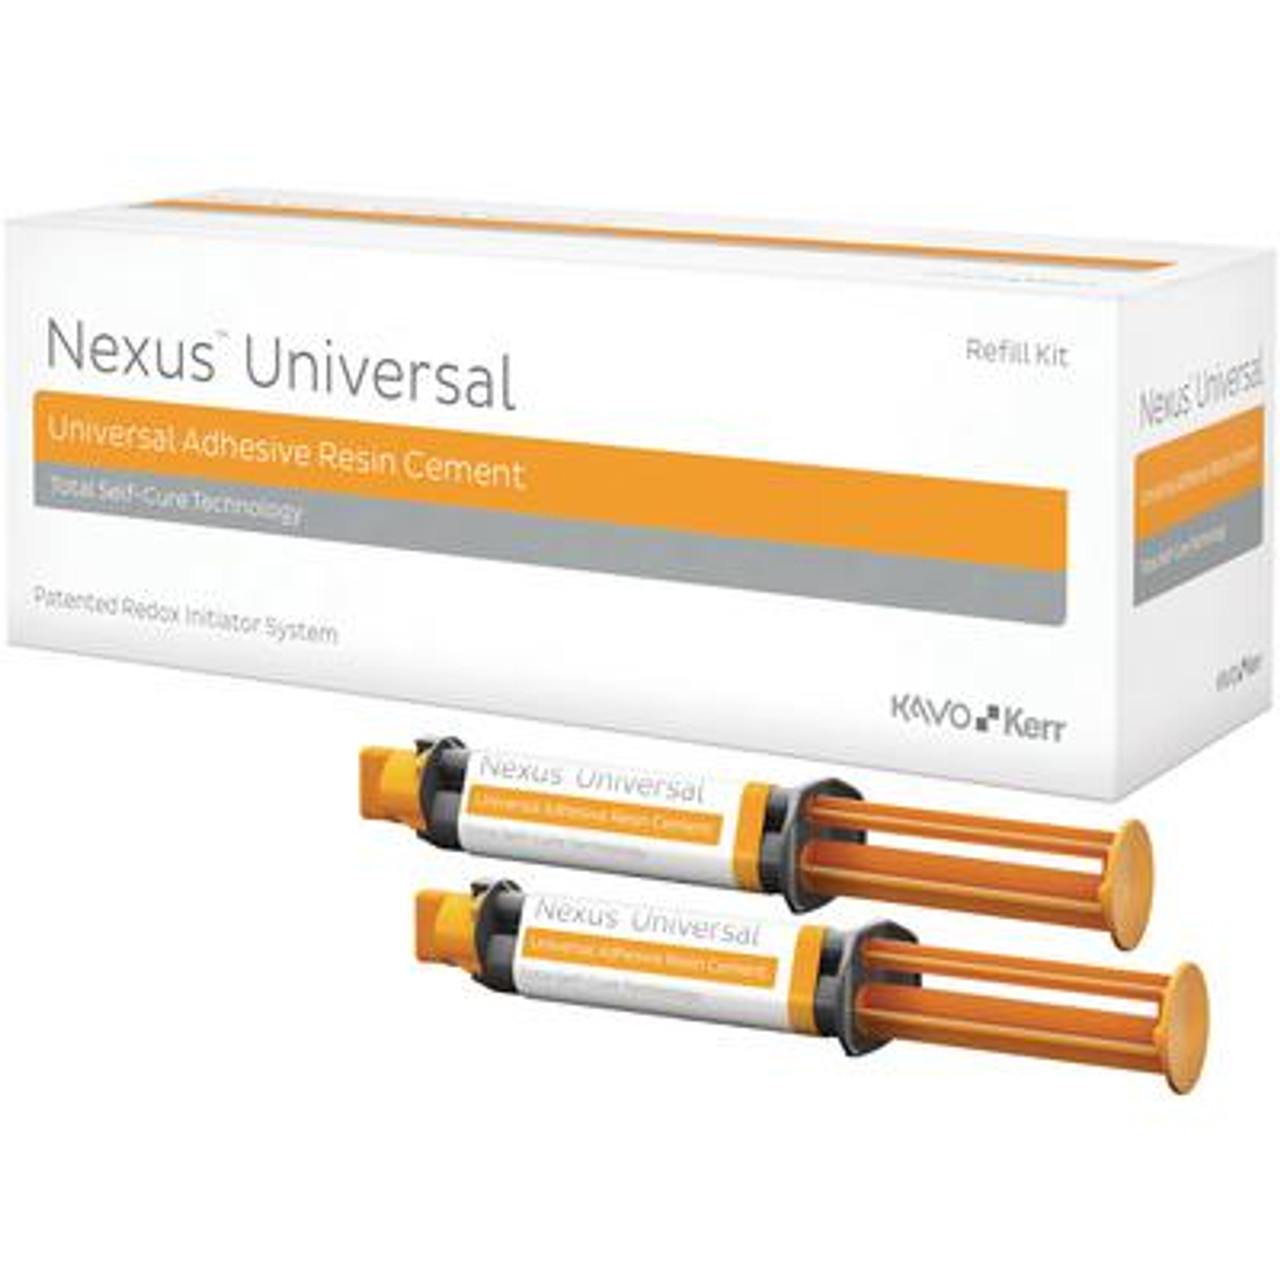 Kerr NEXUS Universal Refill Kit, White Opaque